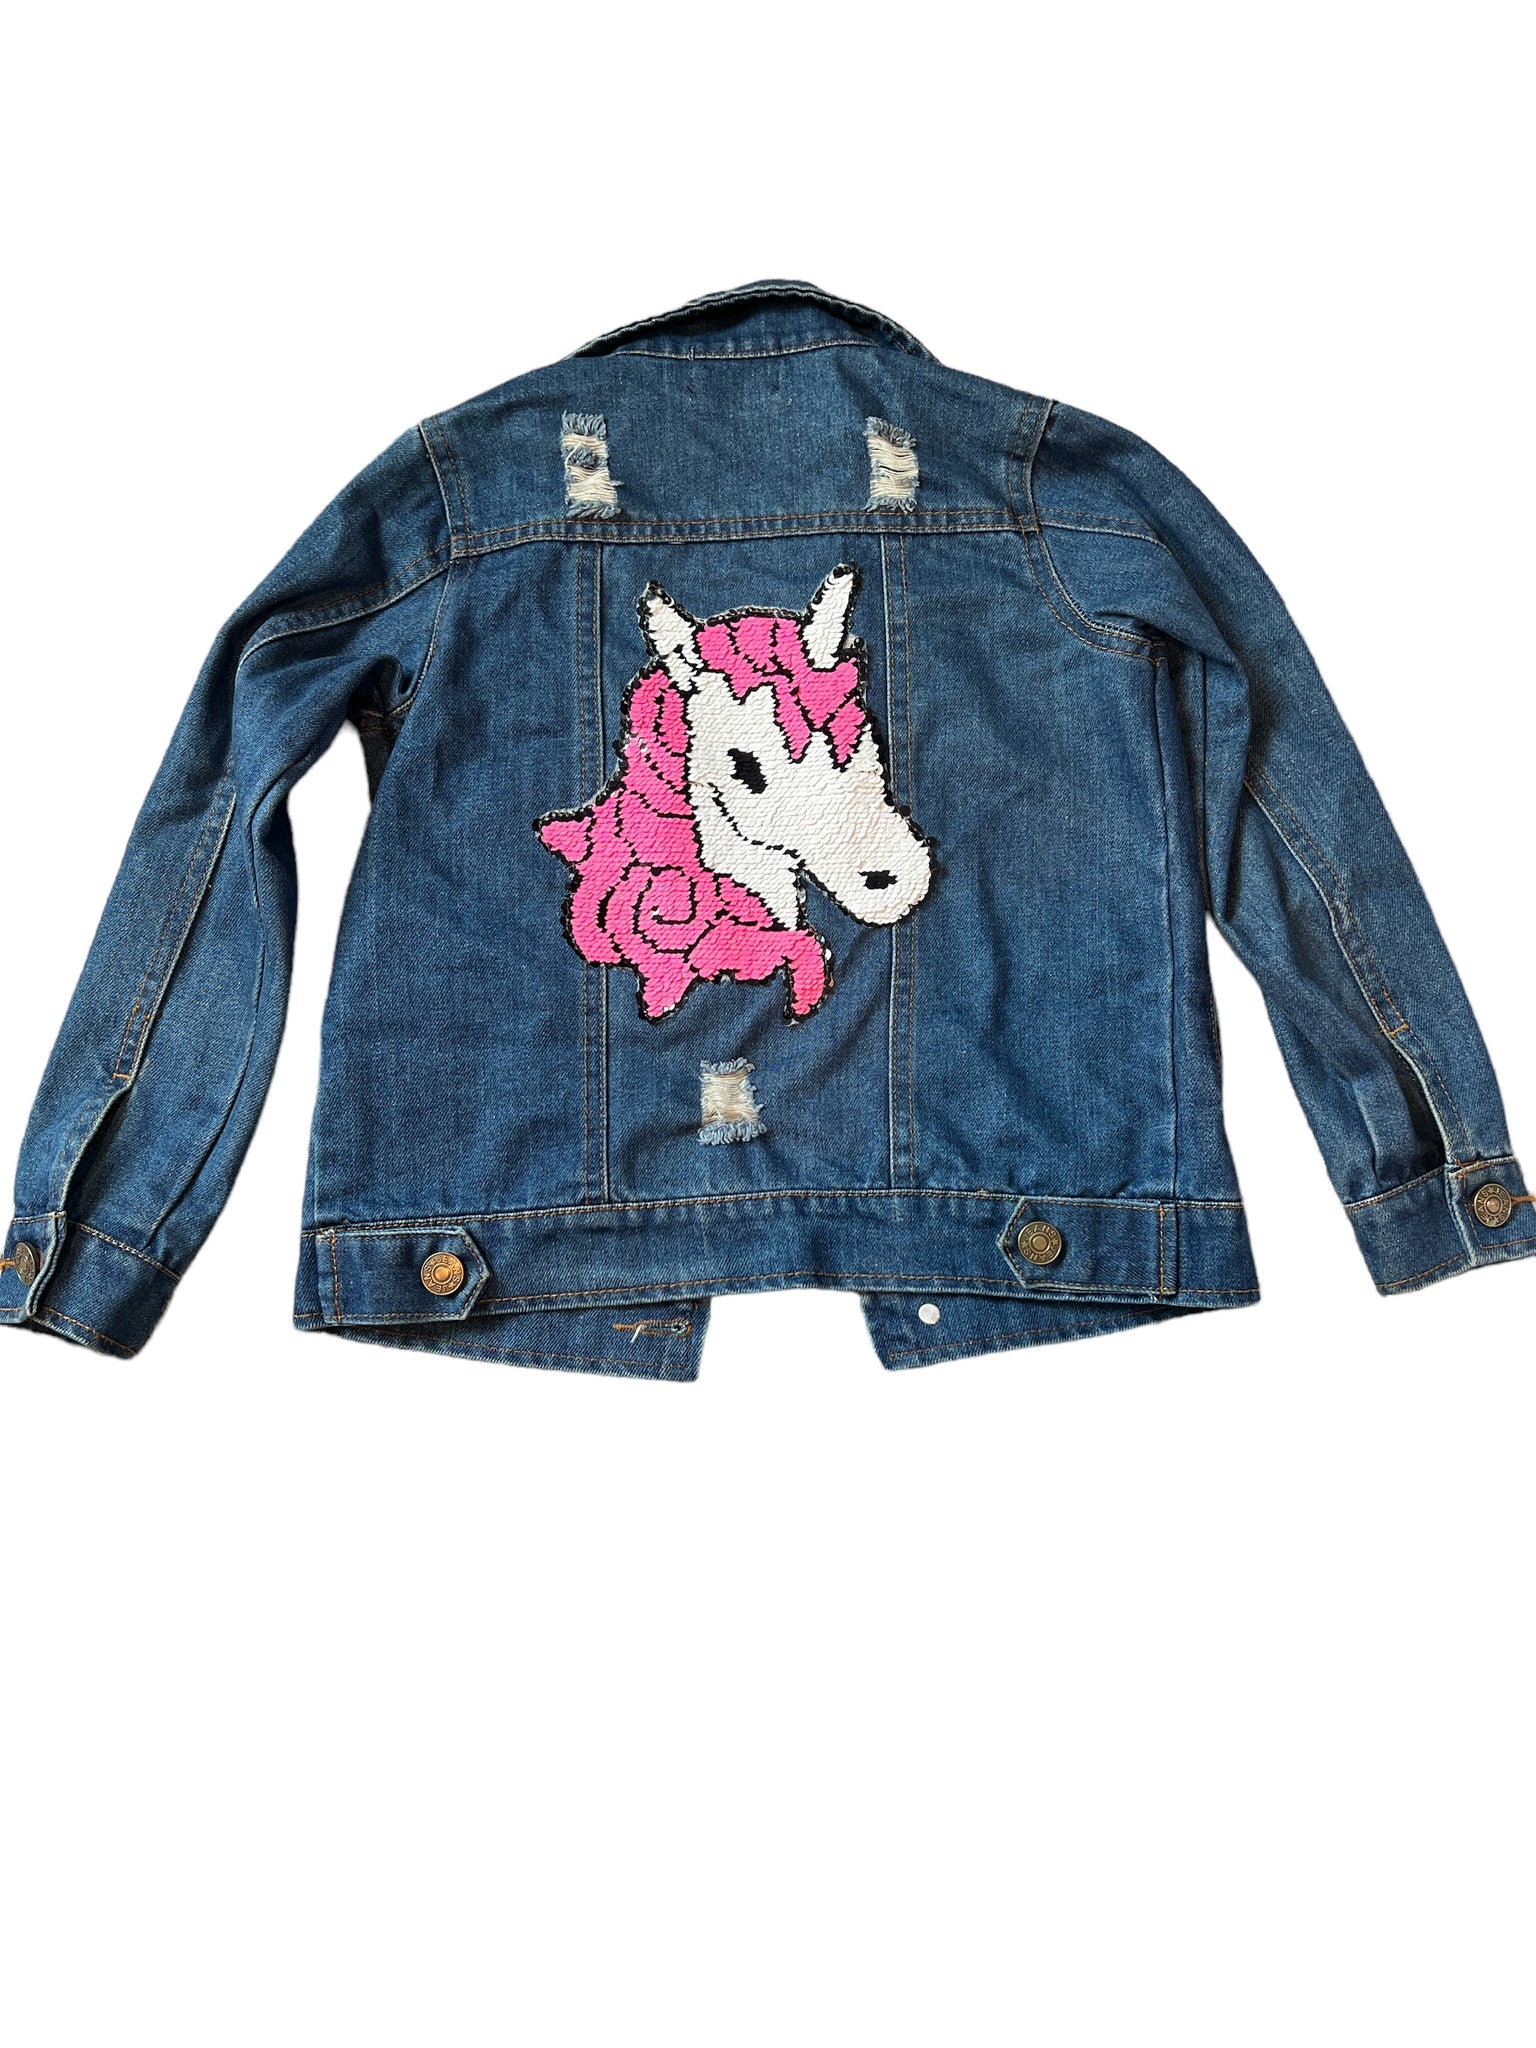 Wippette Toddler Girls' Unicorn Polka Dot Winter Jacket Coat - Walmart.com